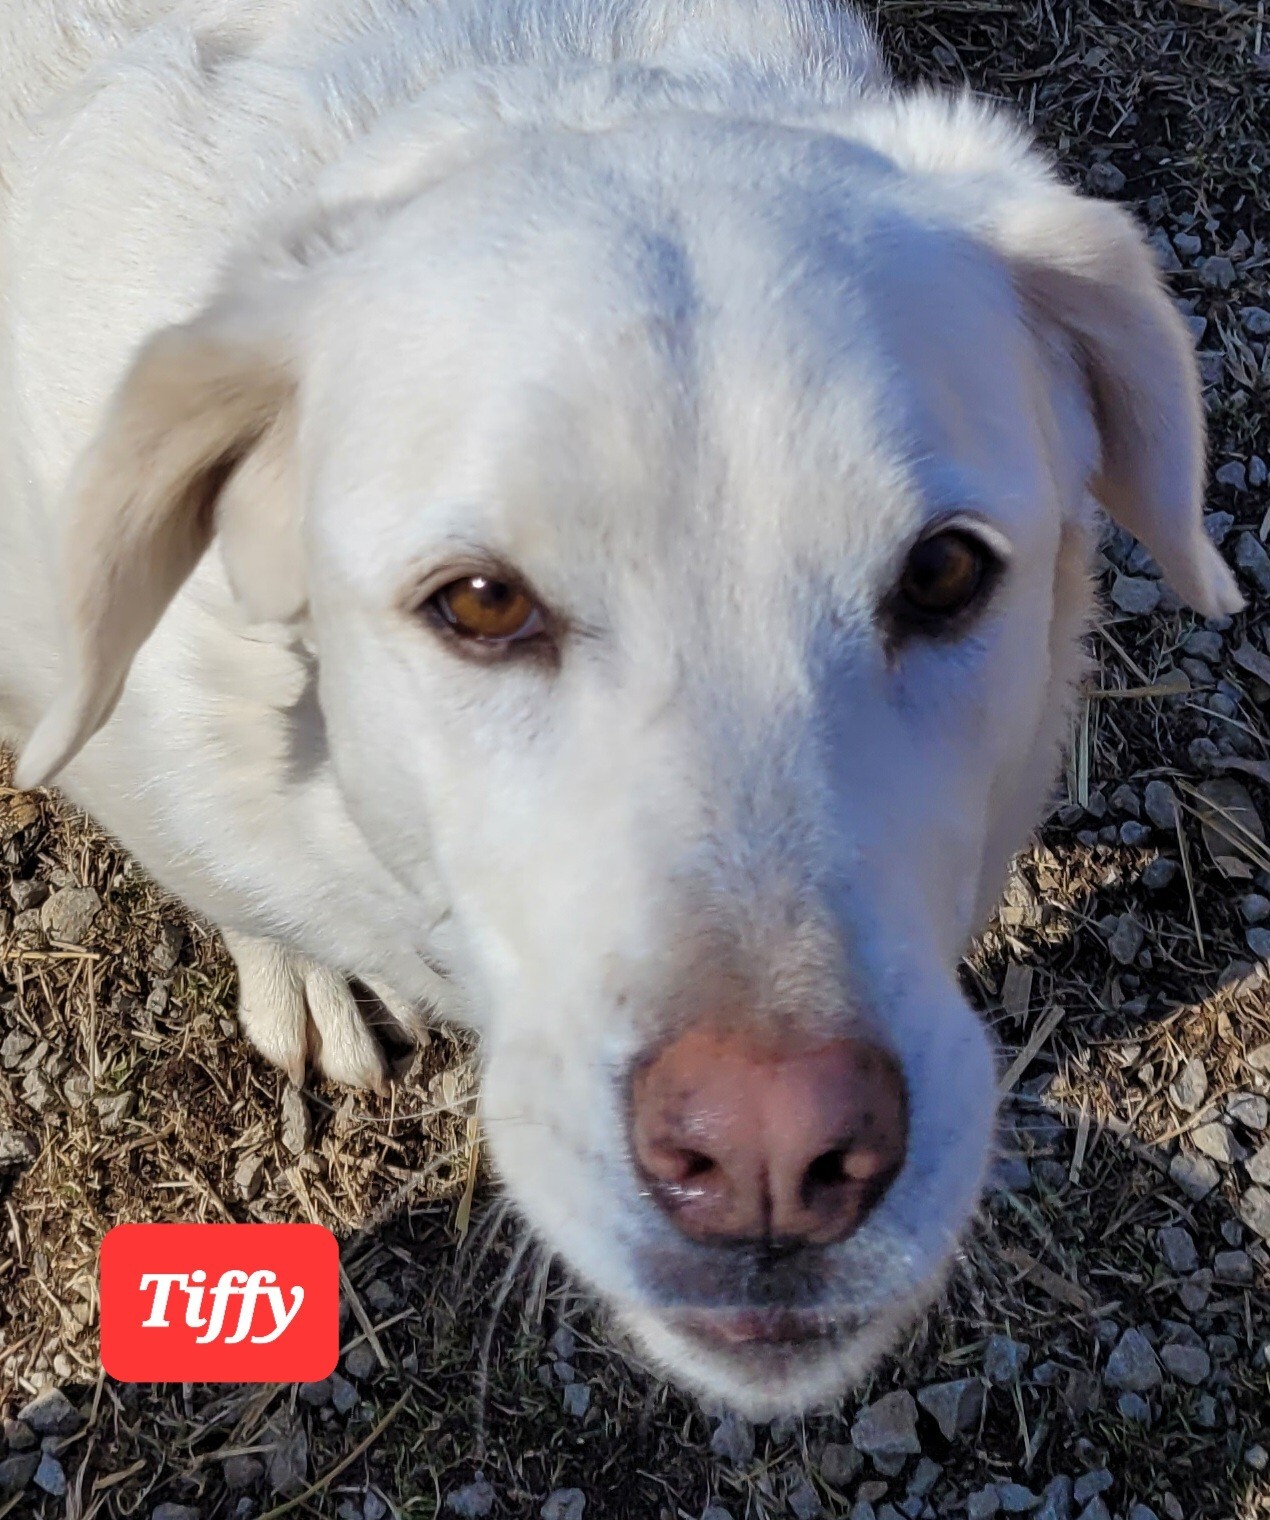 Tiffy , an adoptable Labrador Retriever in Mashpee, MA, 02649 | Photo Image 1